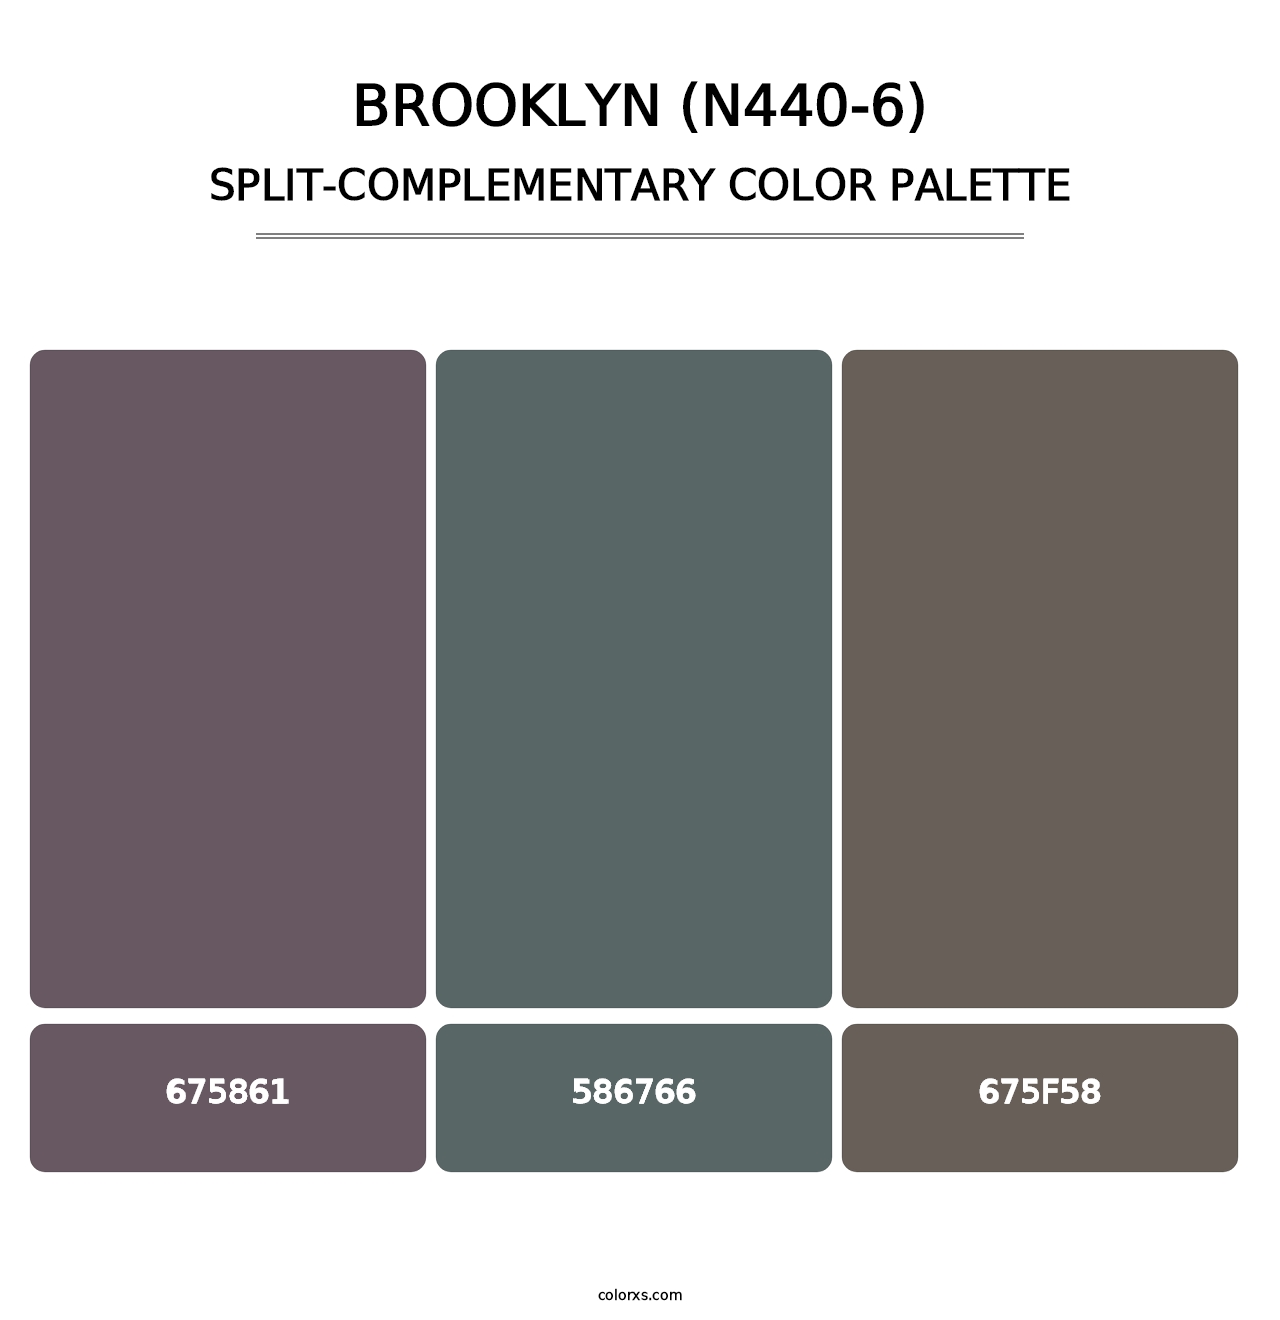 Brooklyn (N440-6) - Split-Complementary Color Palette